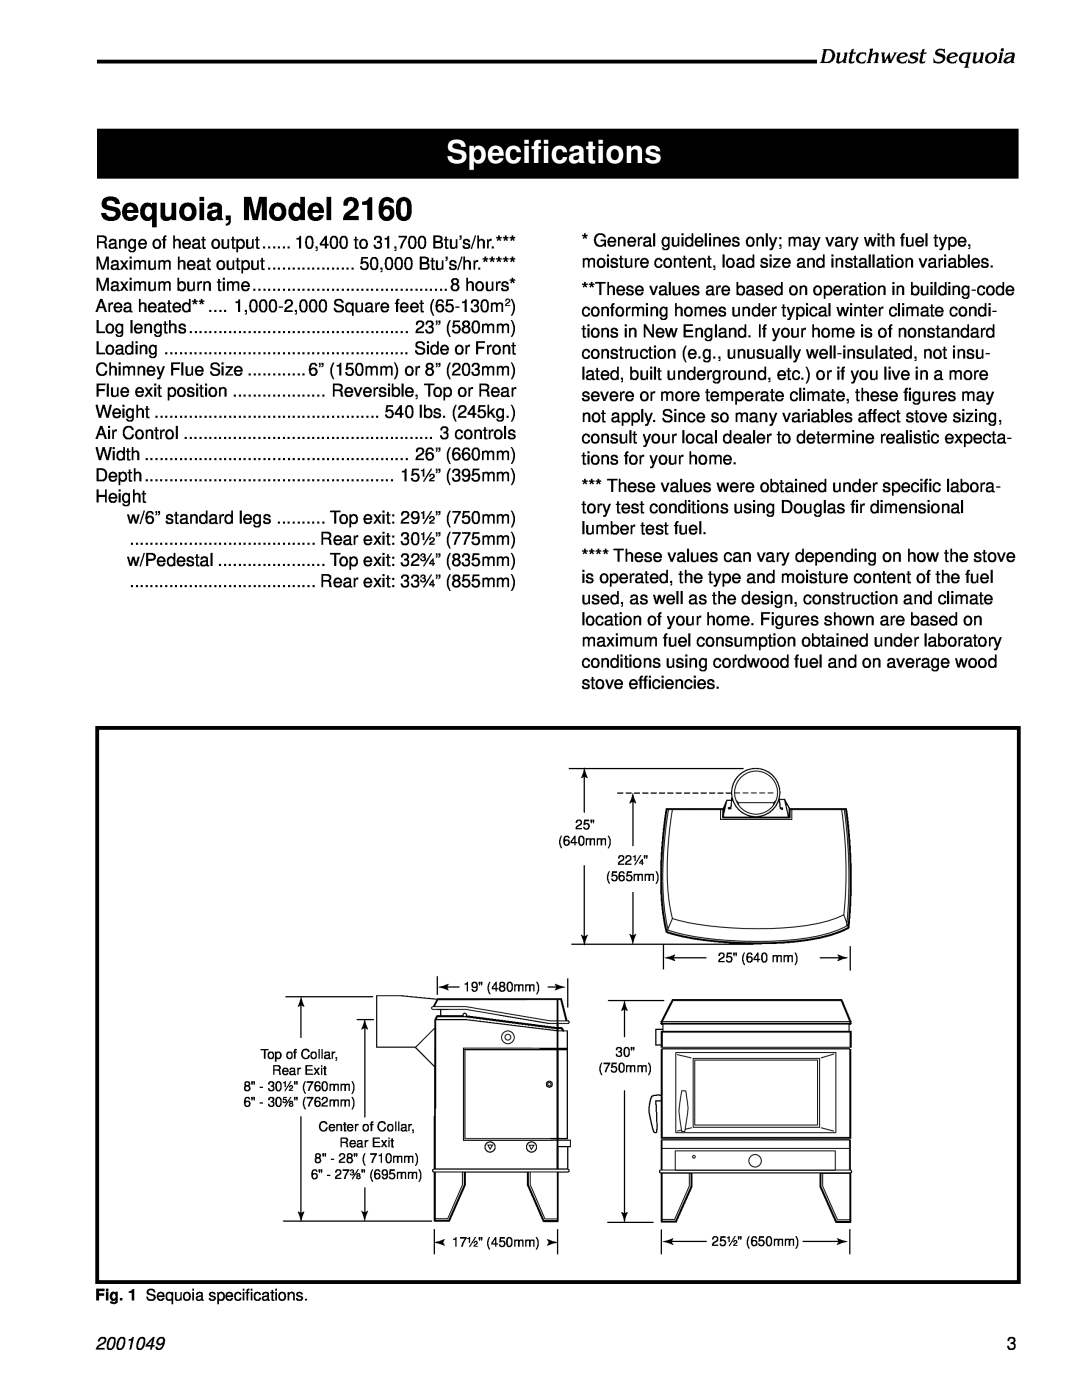 Vermont Casting 2160 manual Specifications, Sequoia, Model, Dutchwest Sequoia, 2001049 